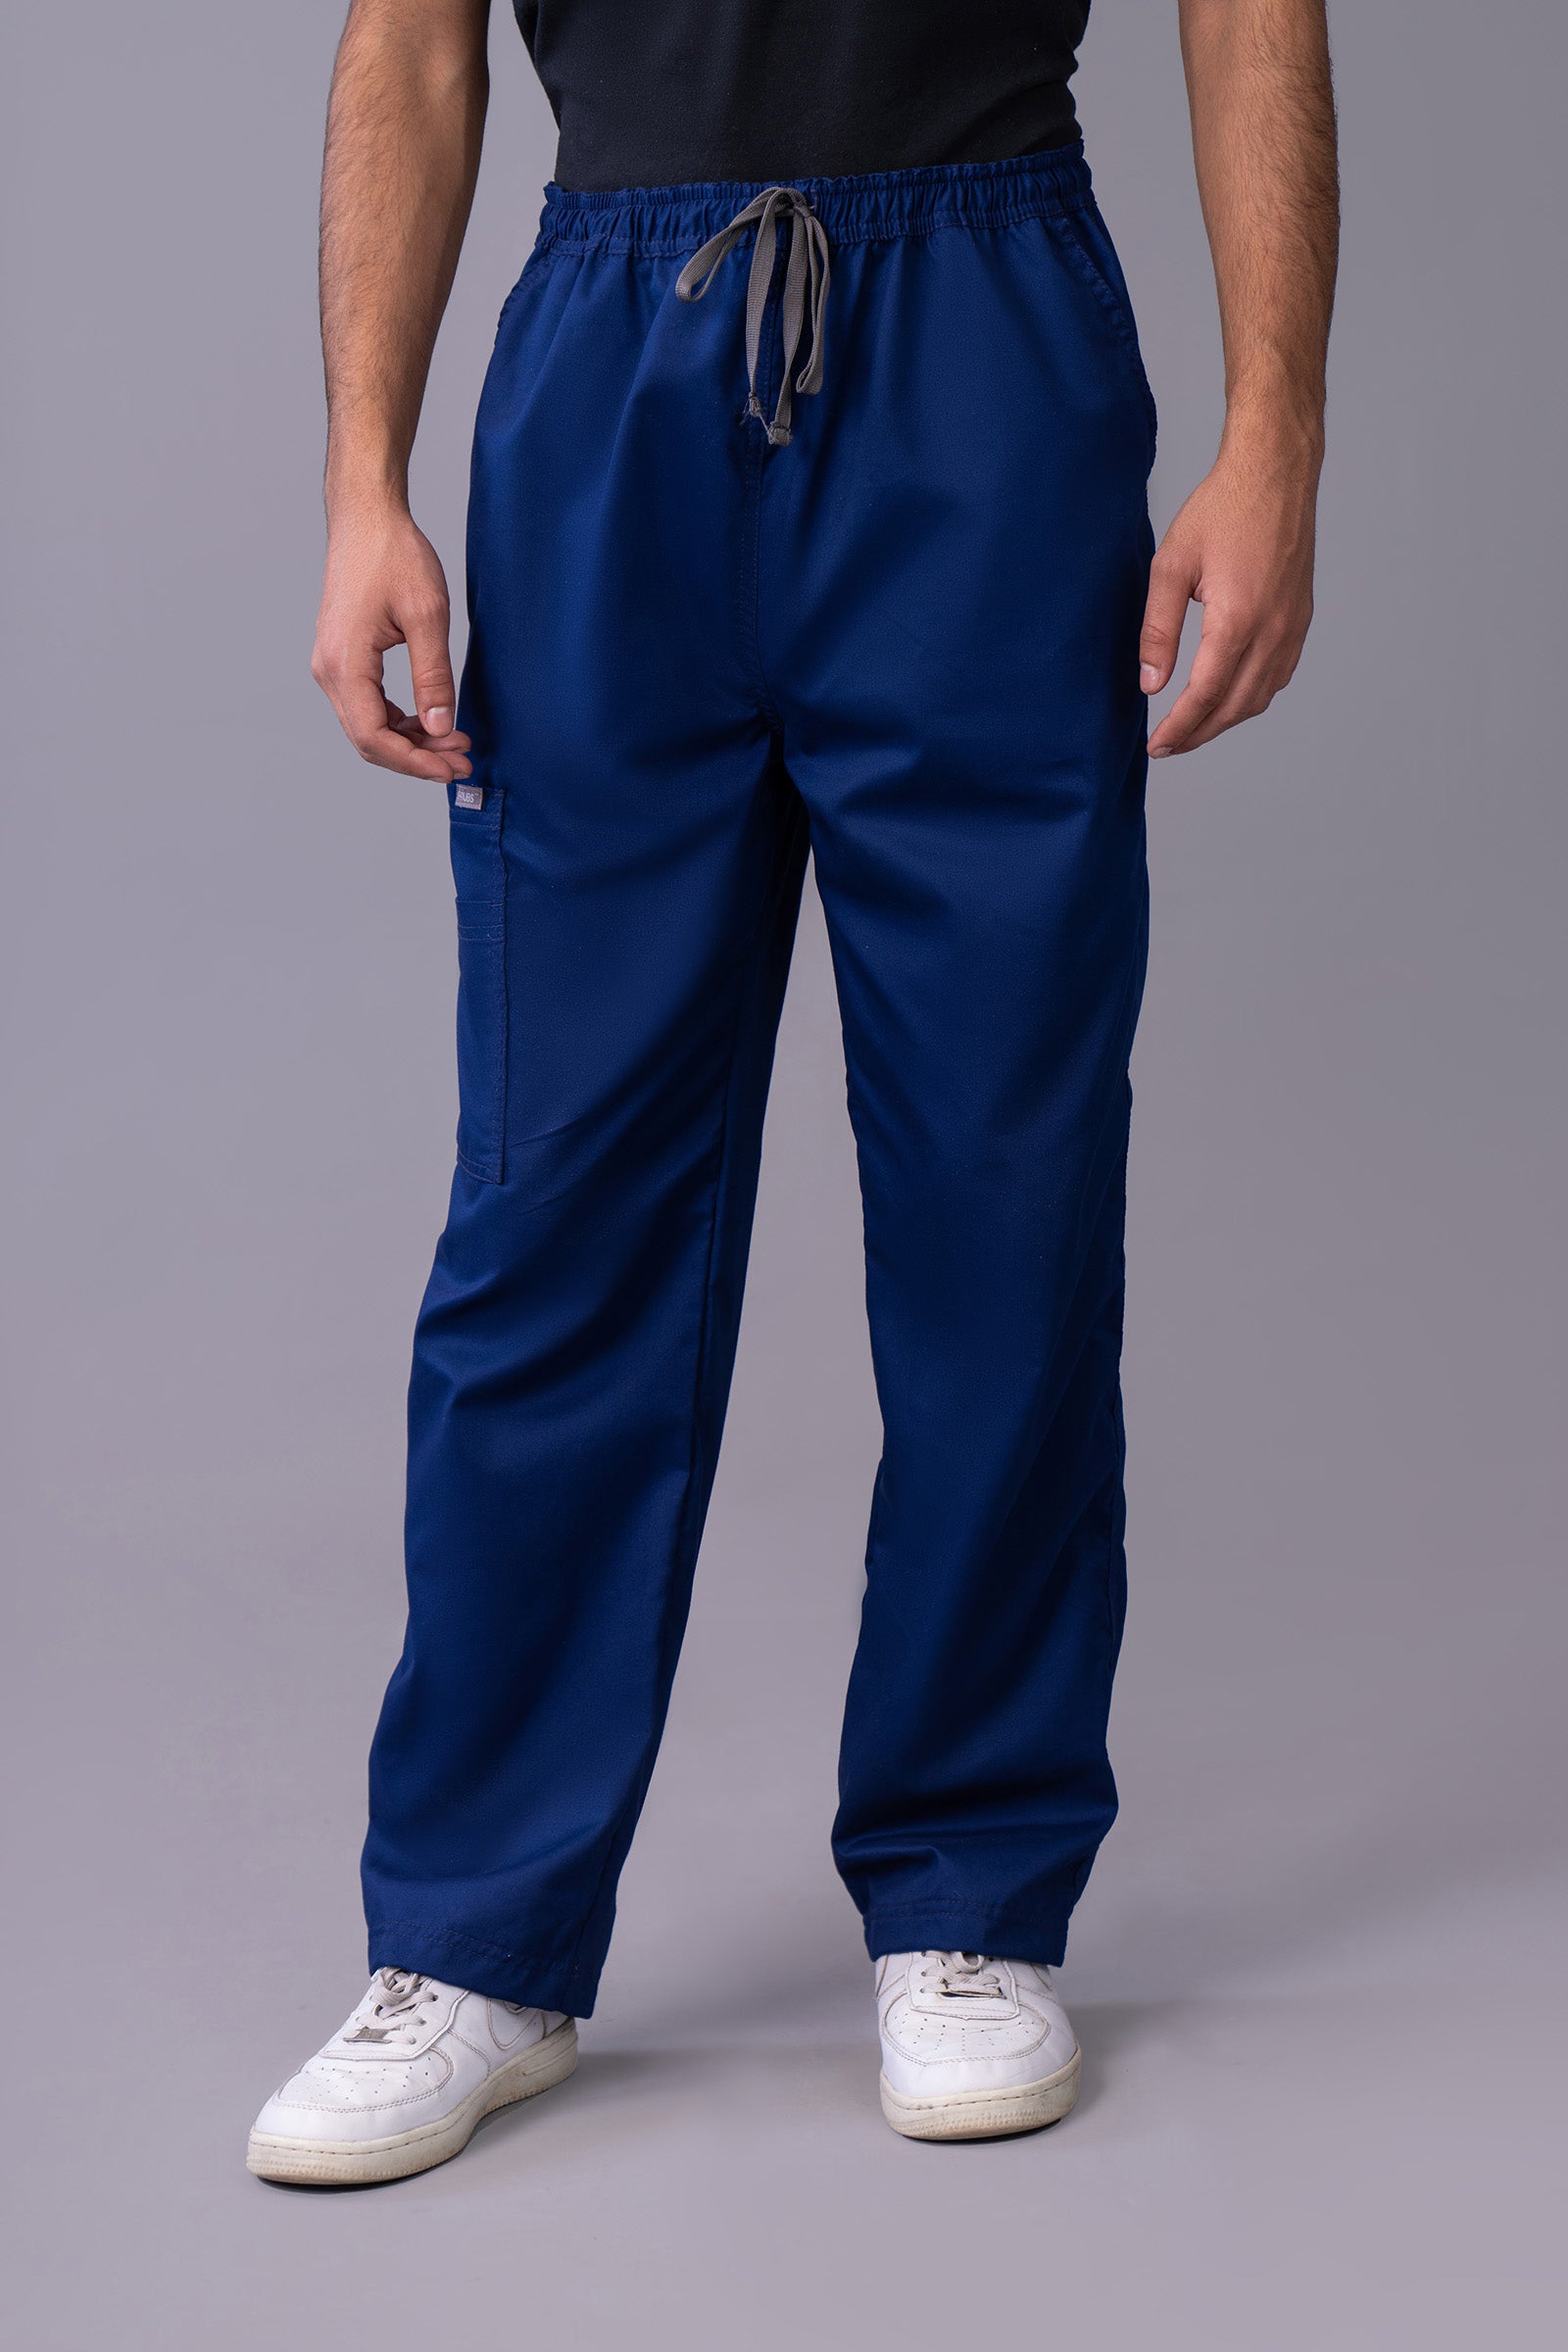 Blue unisex trousers